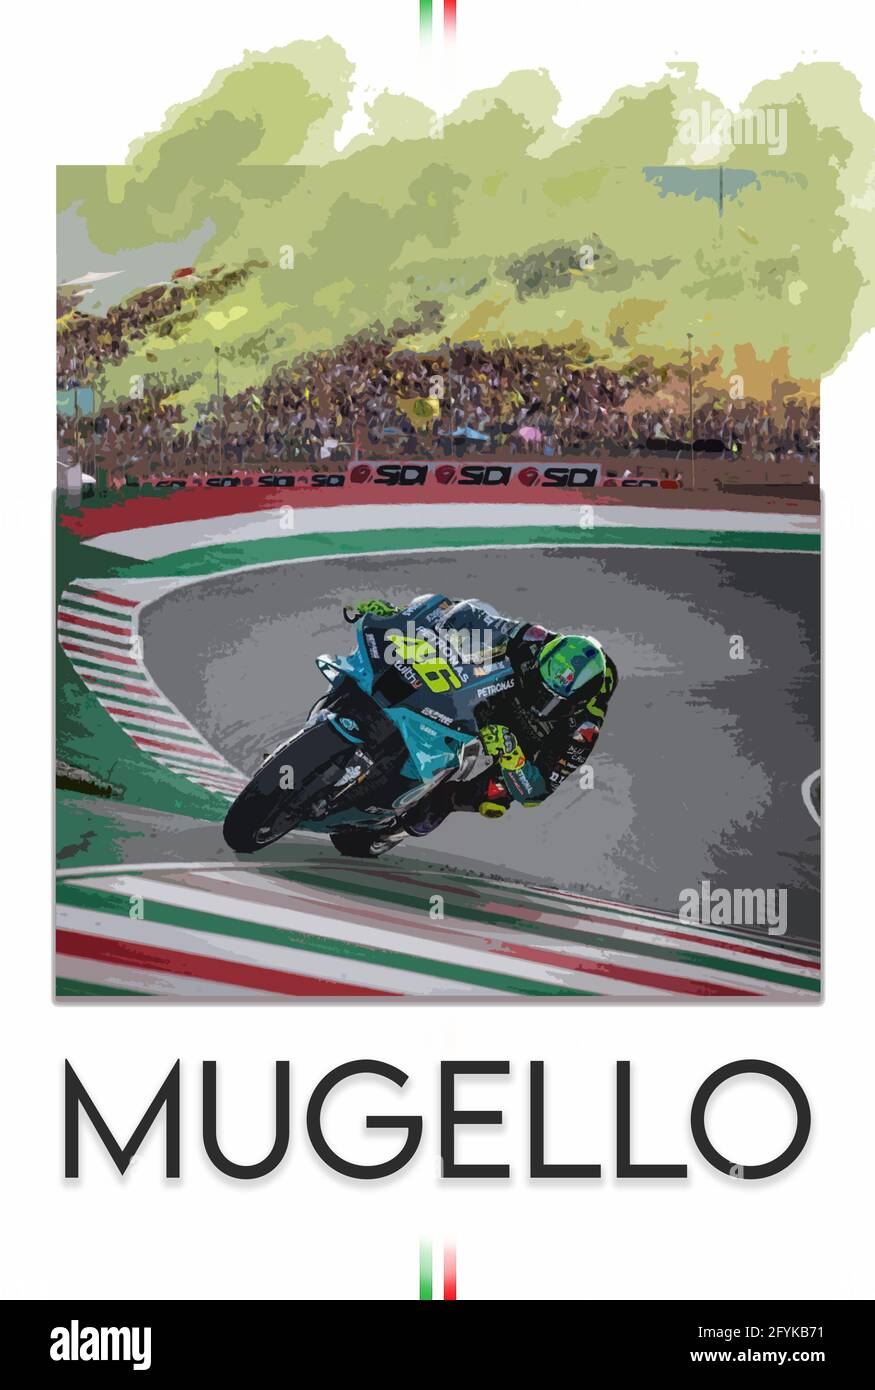 Weekend Poster for Mugello Moto GP Stock Photo